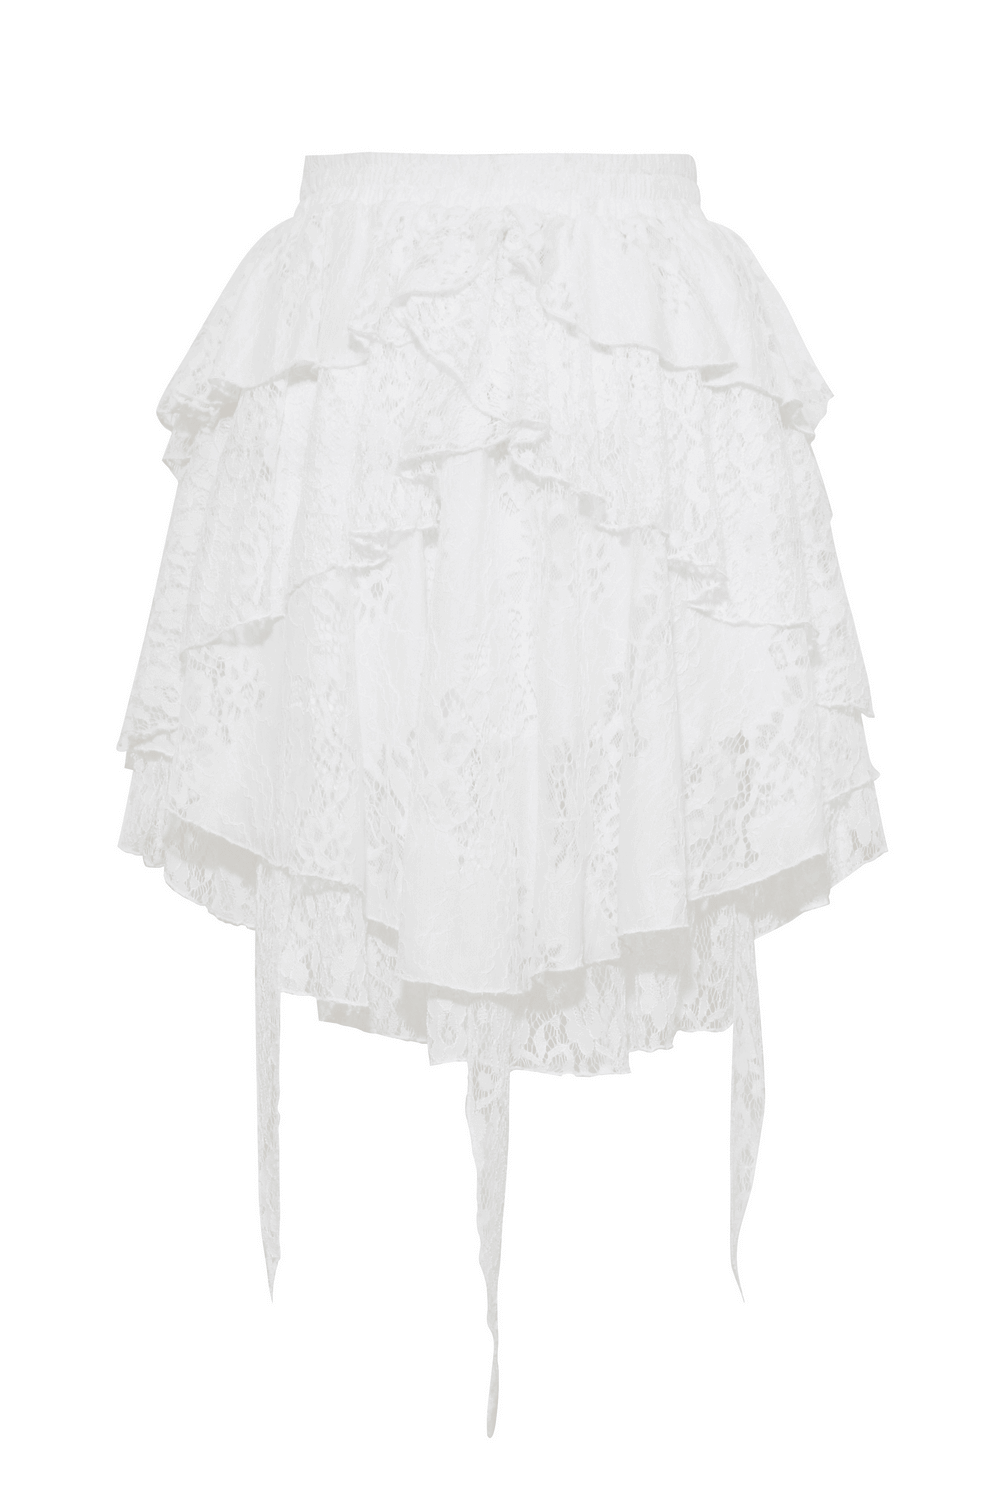 Angelic Women's Lace Mini Skirt with Layered Ruffles